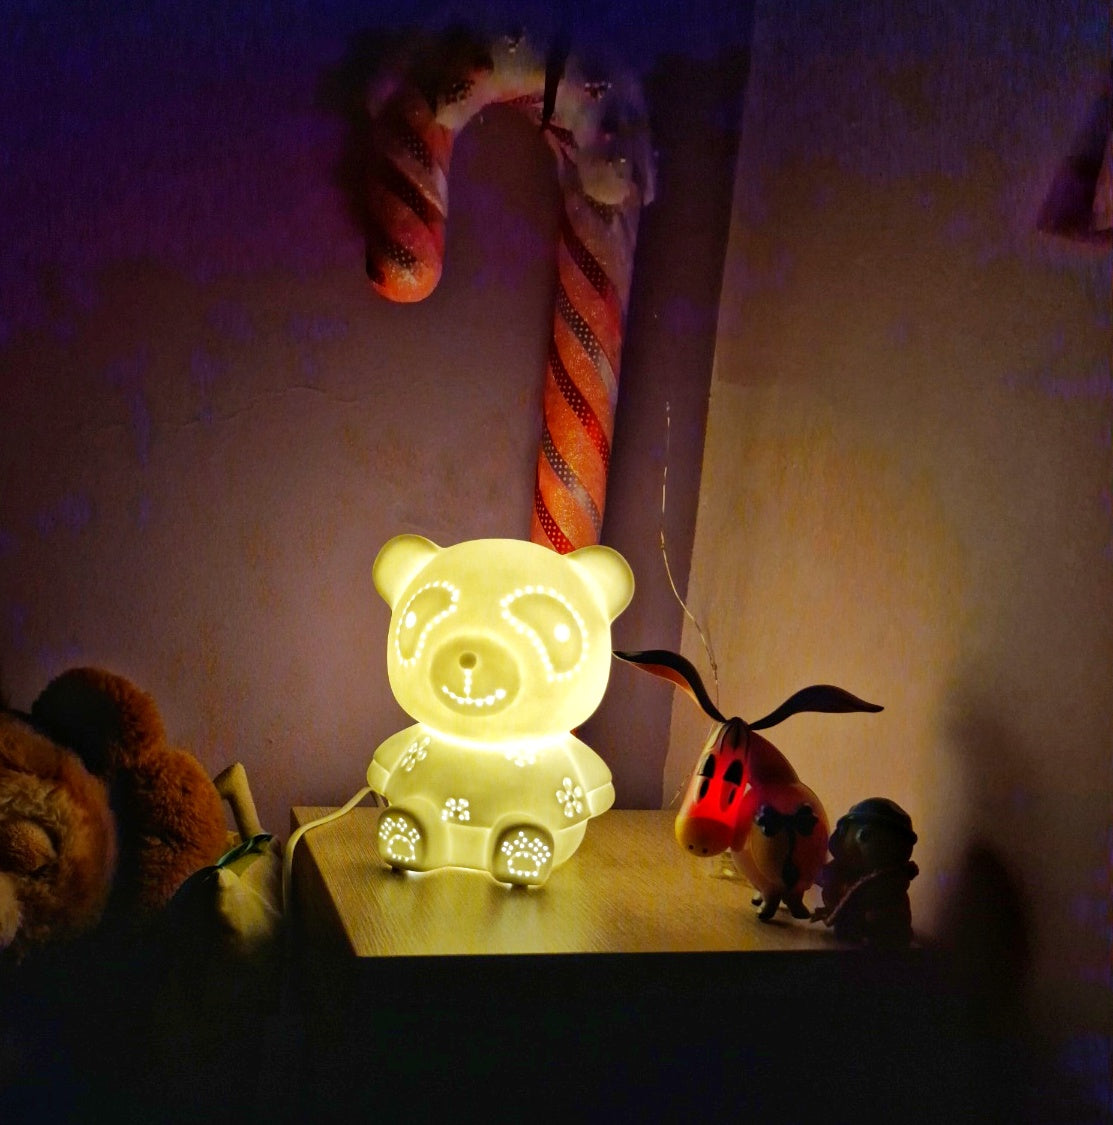 Porcelain Table Lamp, Cute Bear Nightstand Lamp For Kids Room